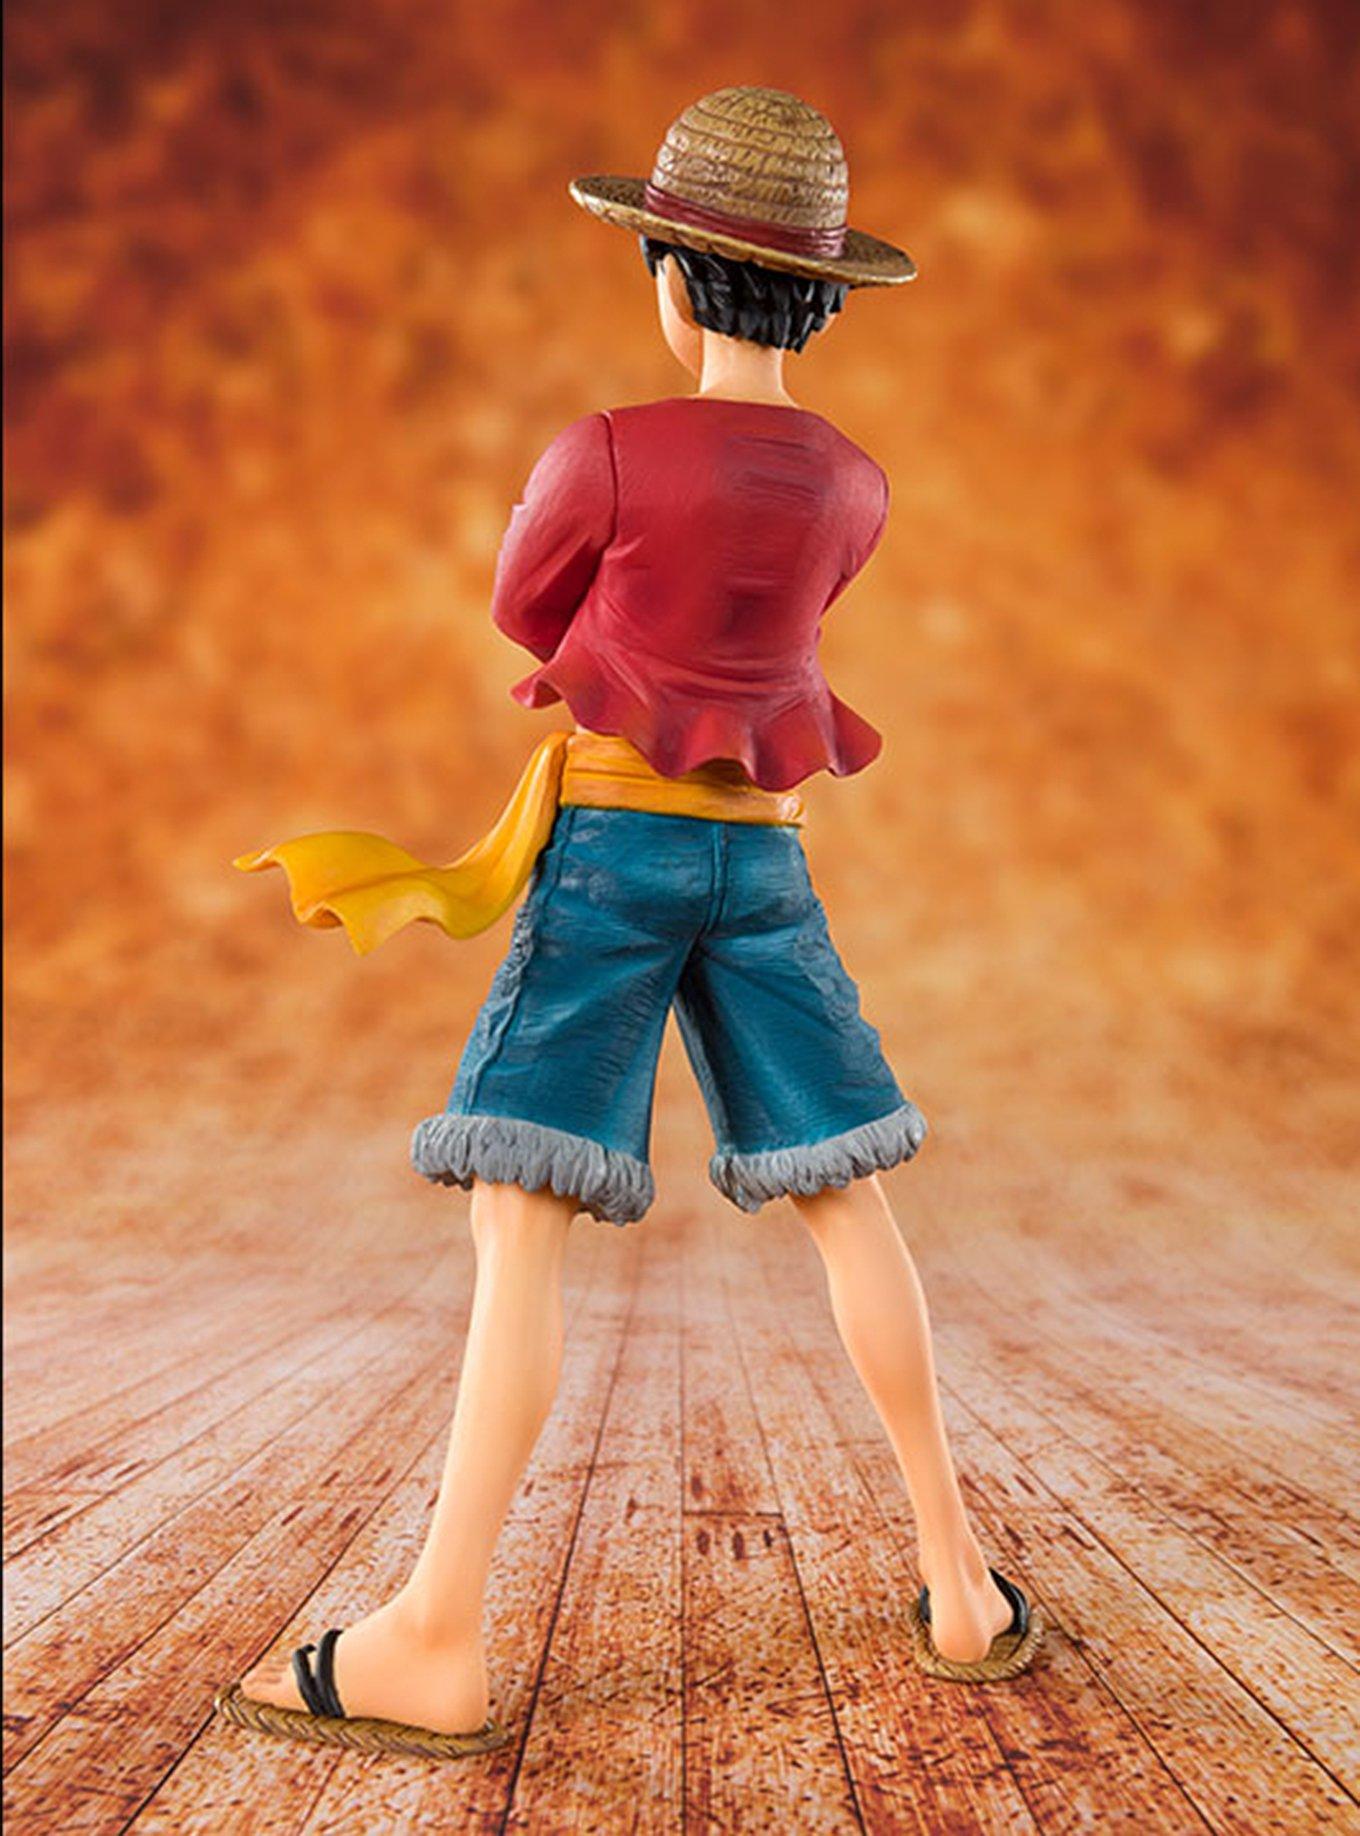 Bandai FiguartsZERO One Piece Straw Hat Luffy Collectible Figure, , alternate